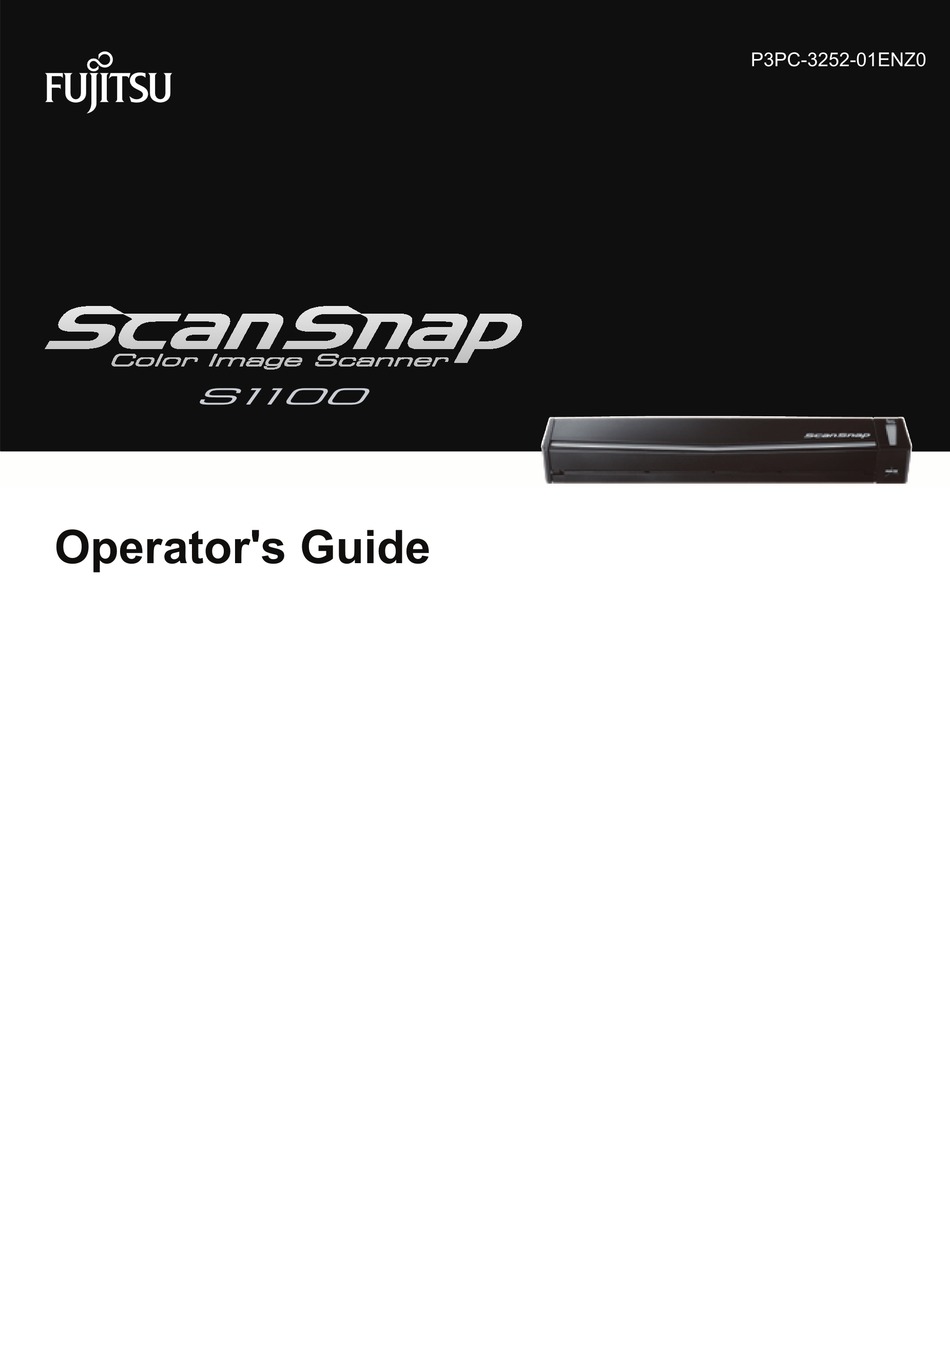 FUJITSU SCANSNAP S1100 OPERATOR'S MANUAL Pdf Download | ManualsLib